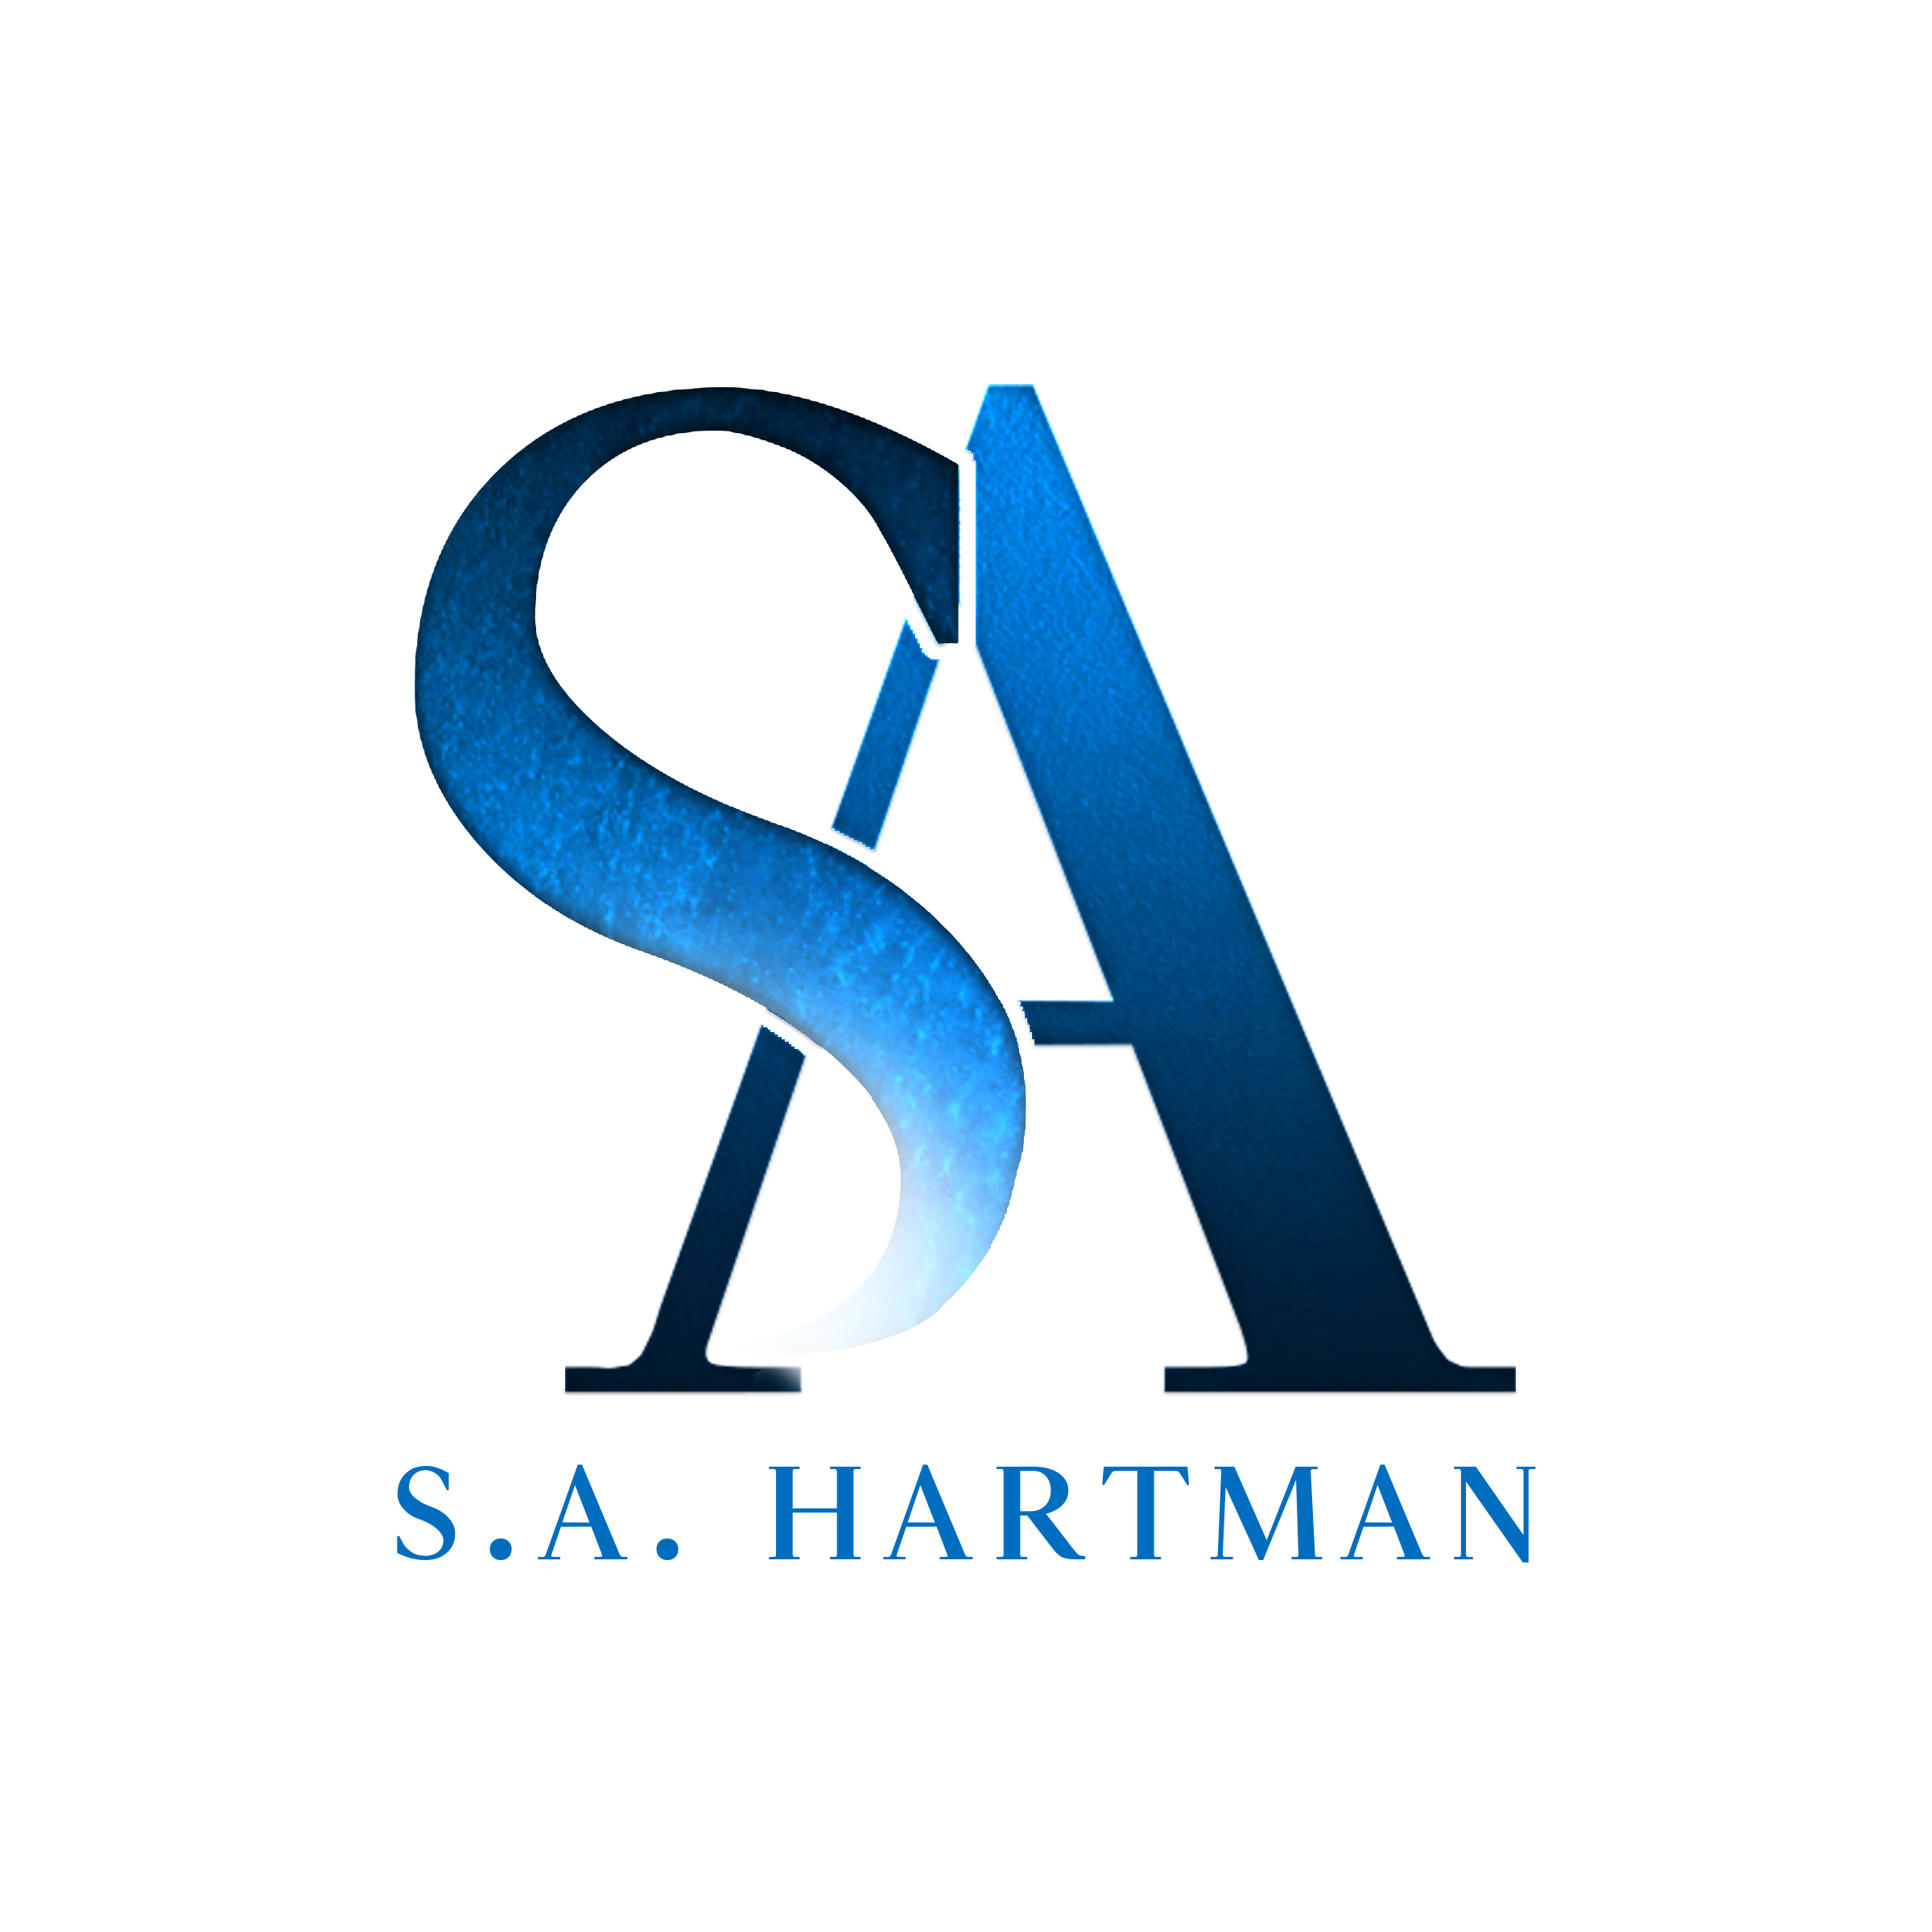 Author S.A. Hartman